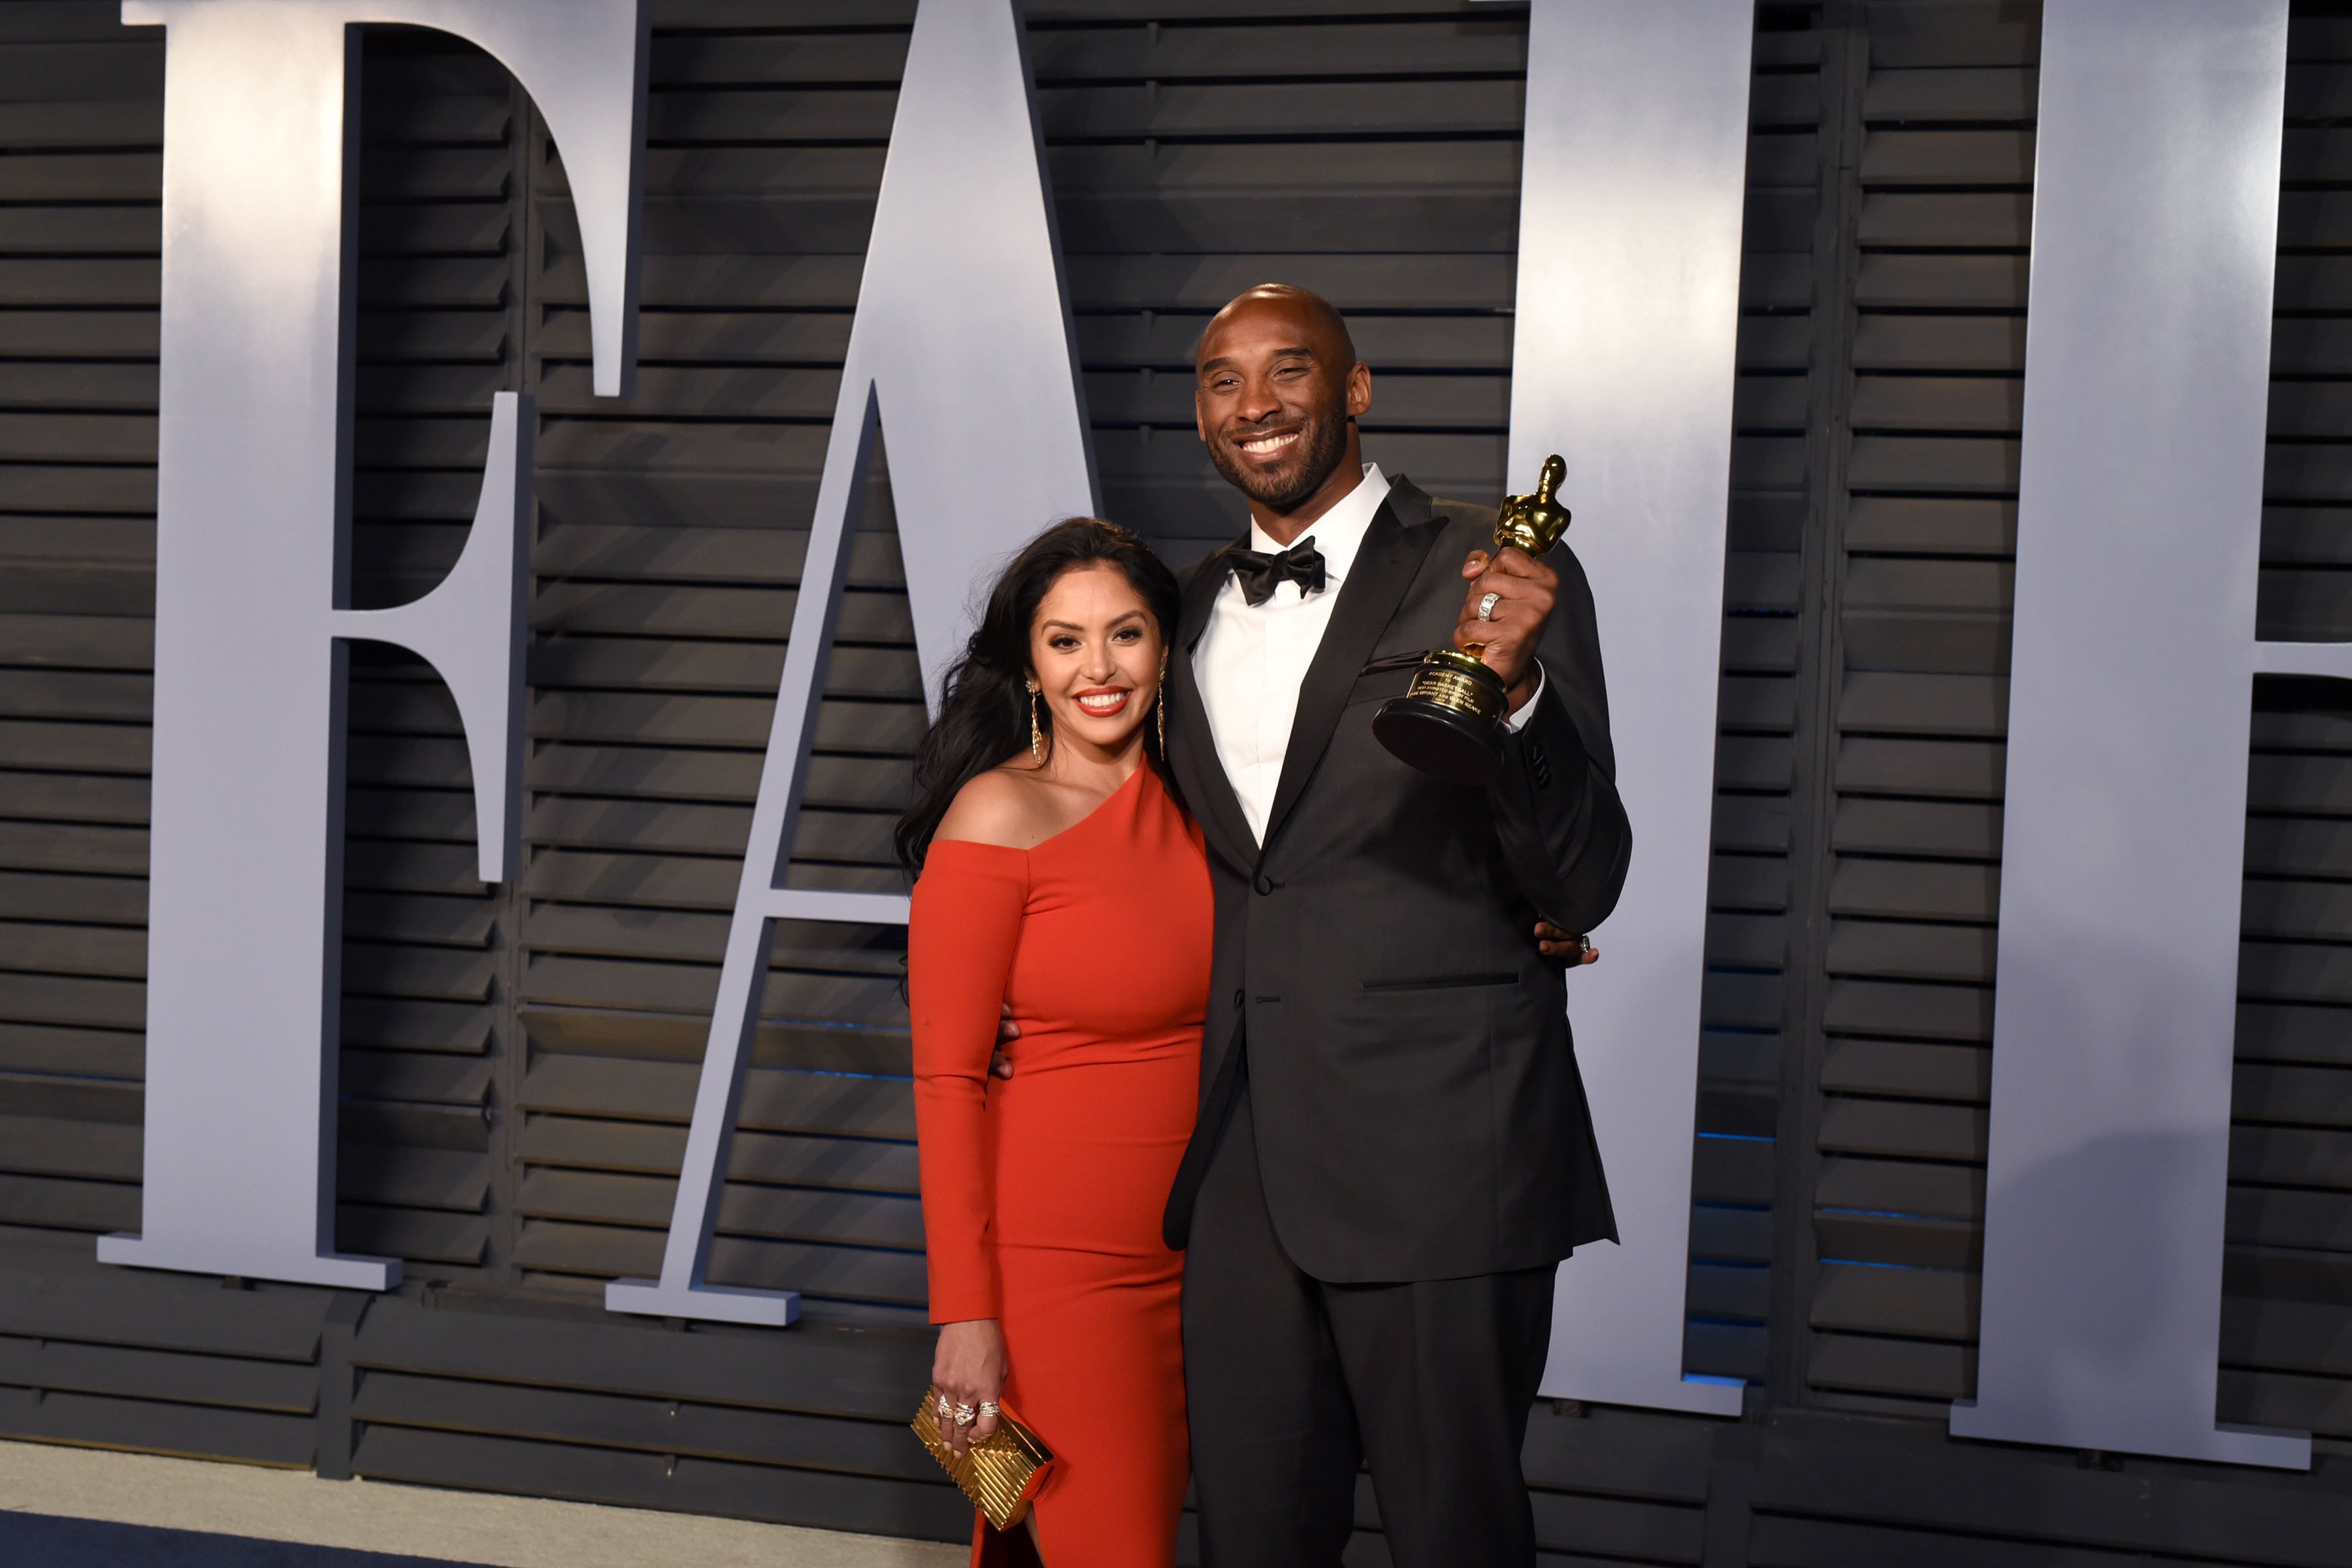 Vanessa Bryant Wishes Kobe Bryant Happy Anniversary, 'I Love You